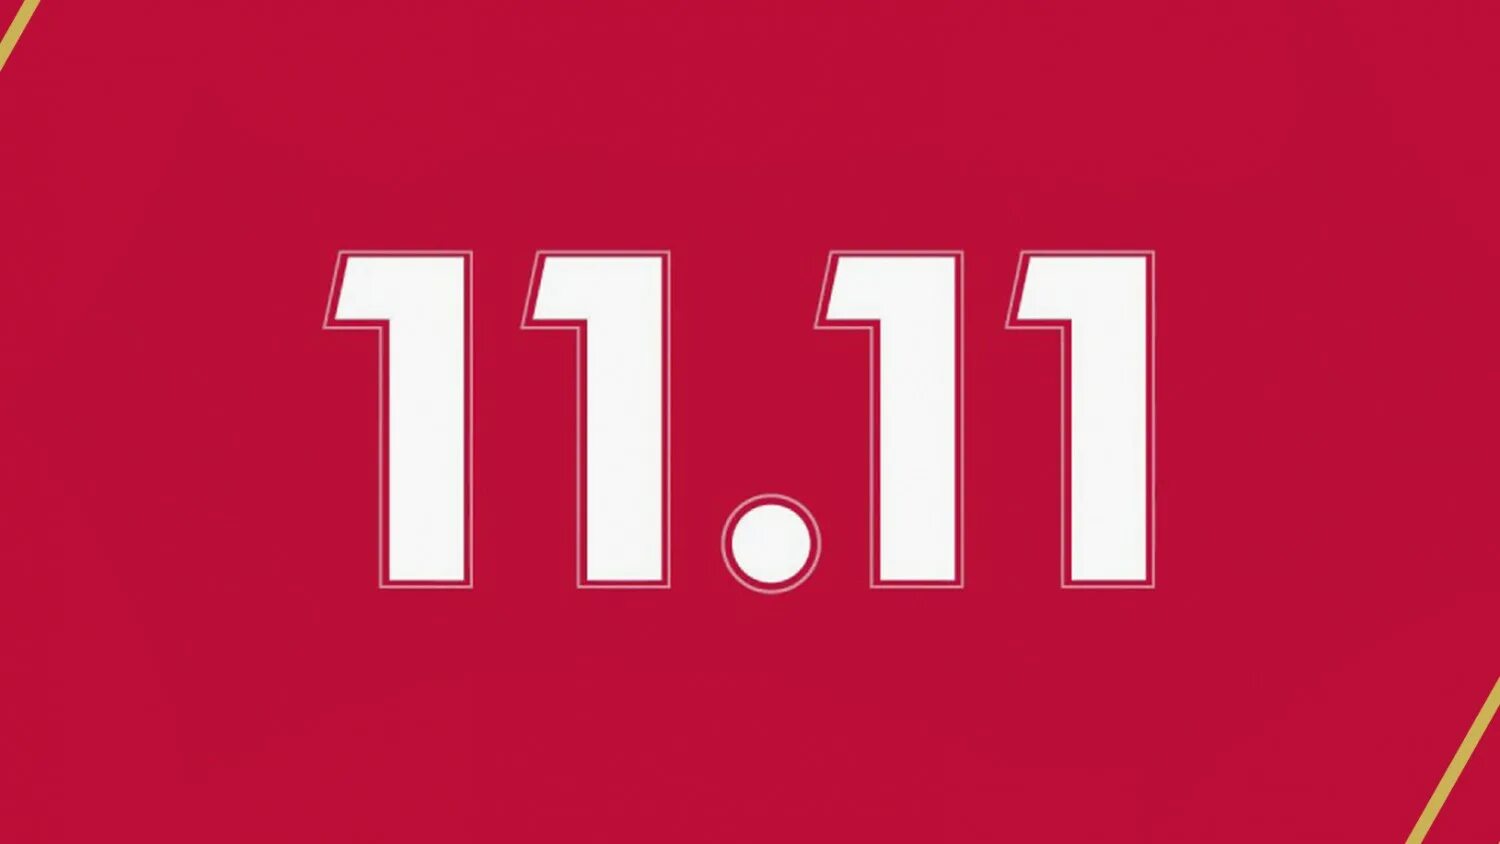 11 нояб. 11.11 Распродажа. 11.11 Распродажа картинки. Скидка 11го. Распродажа 11.11 логотип.